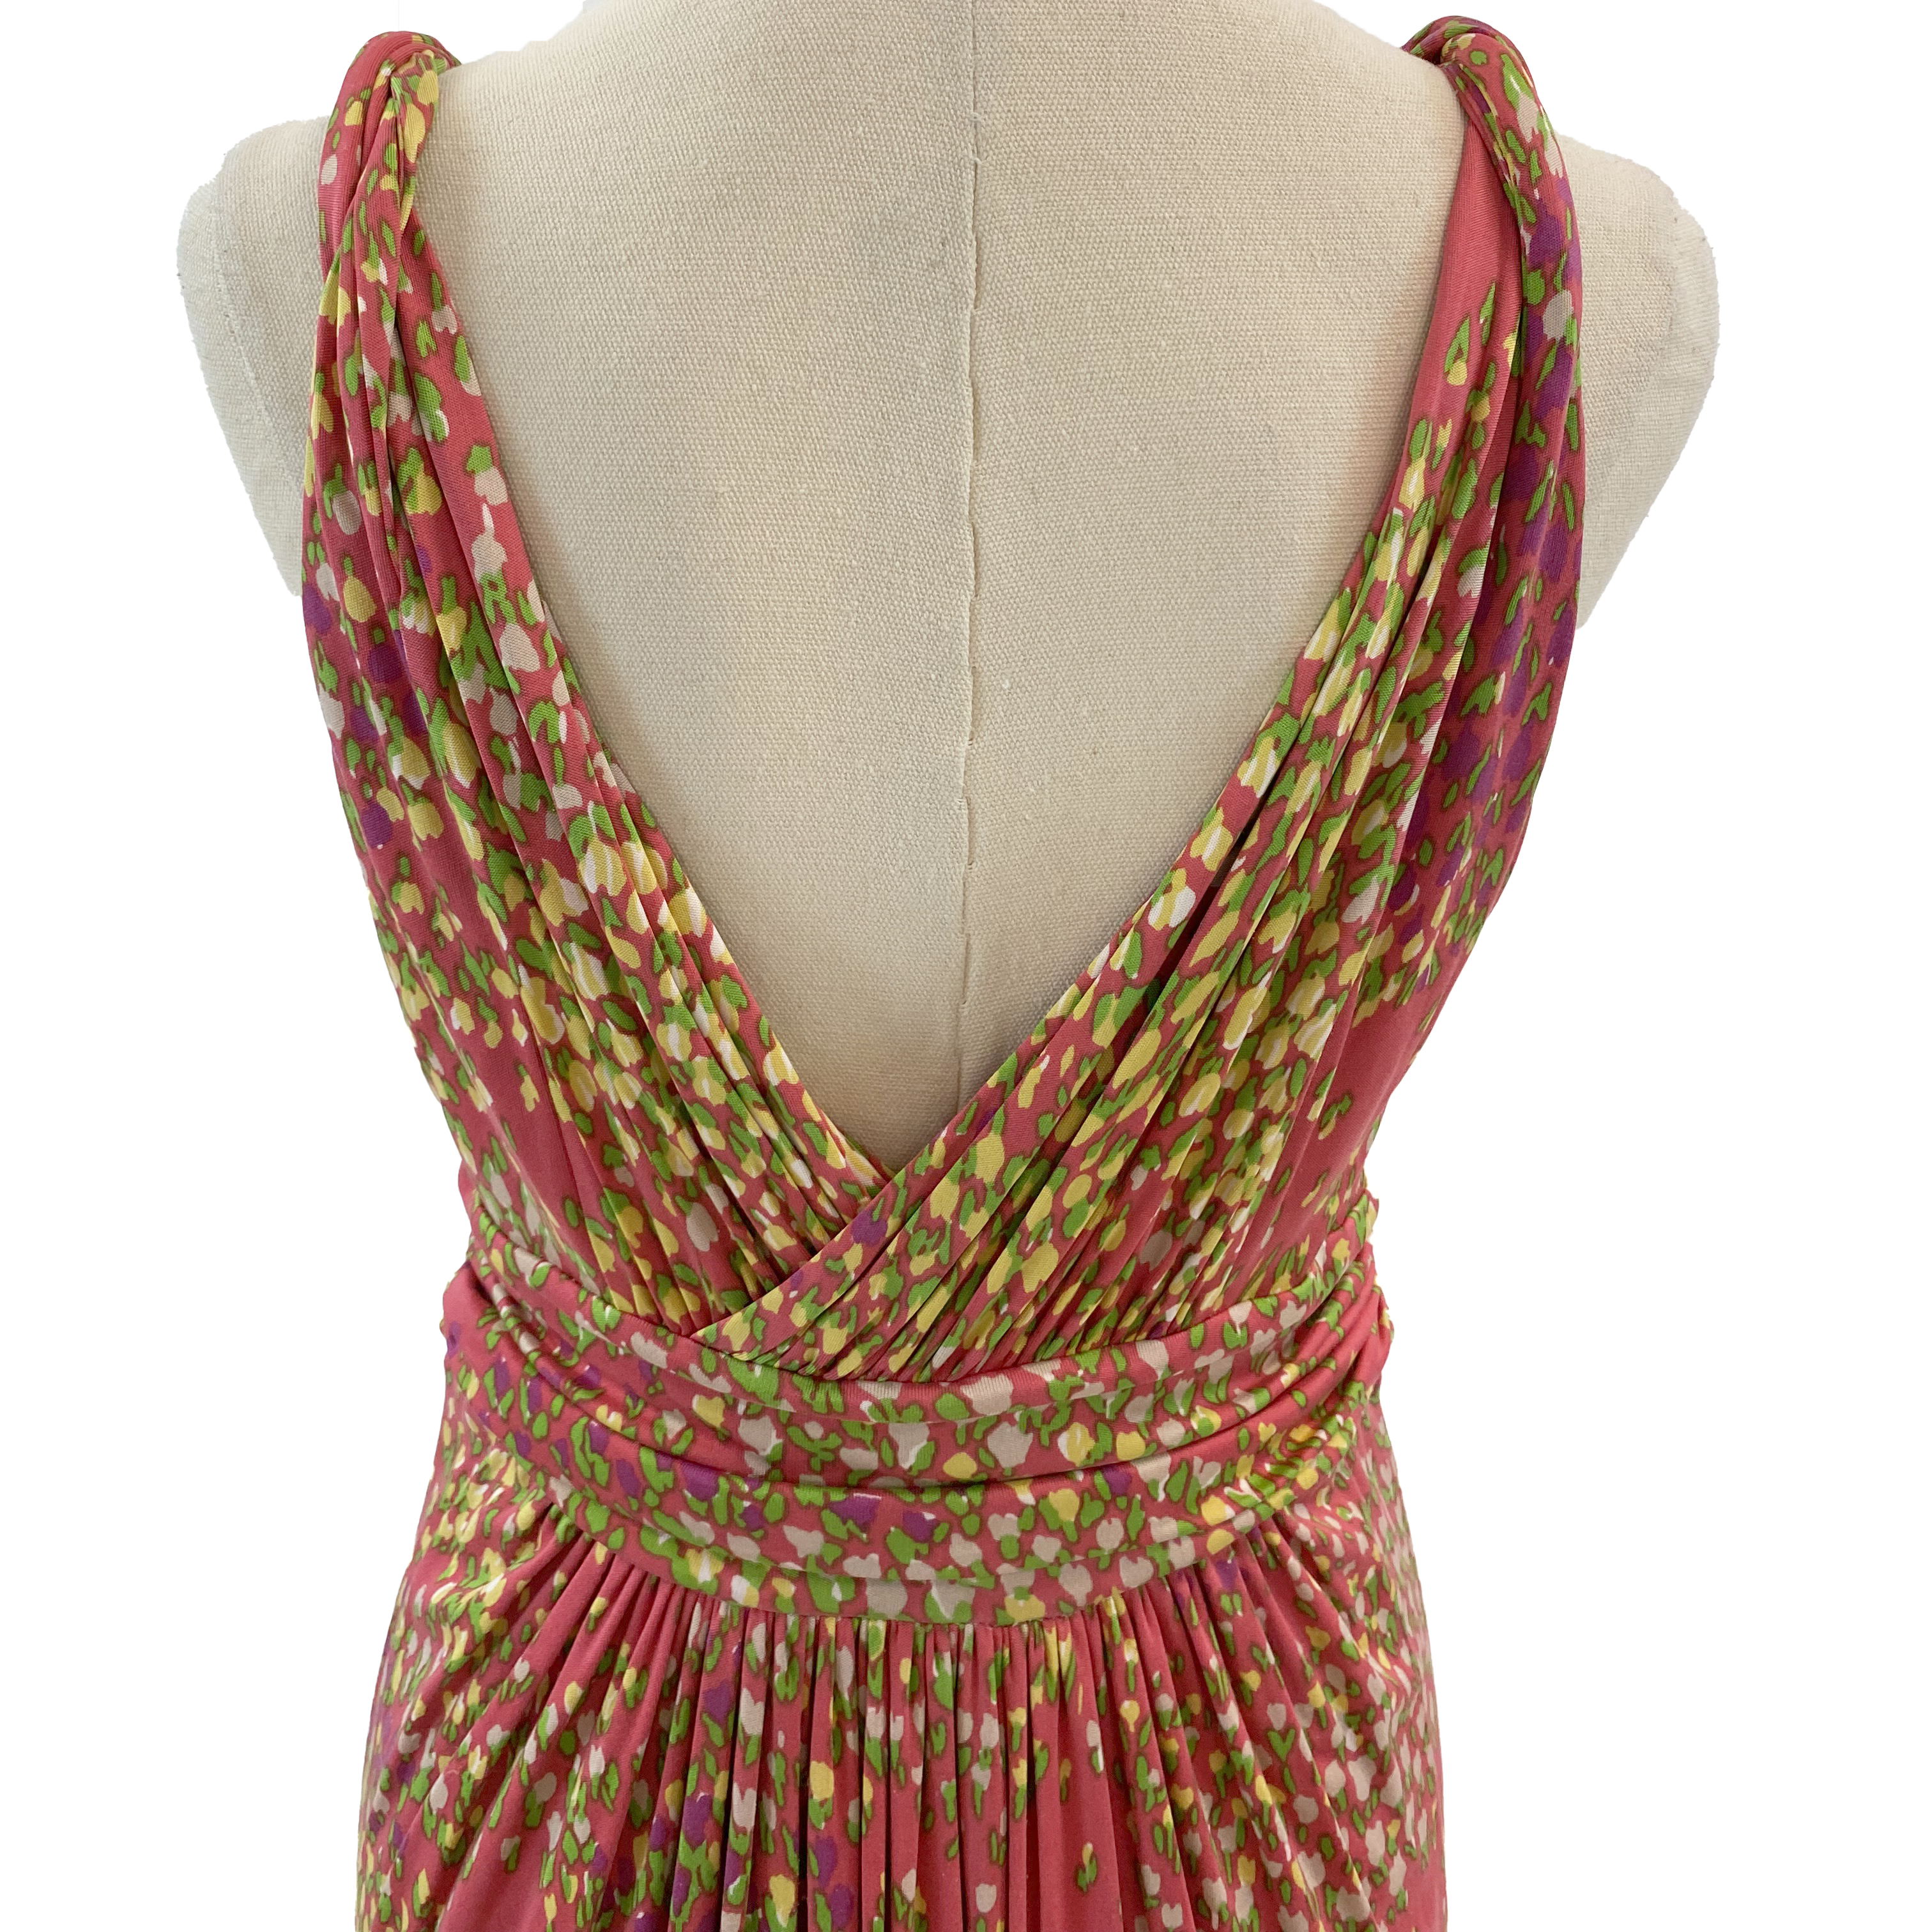 Collette Dinnigan Limited Edition Pink Silk Jersey Dress